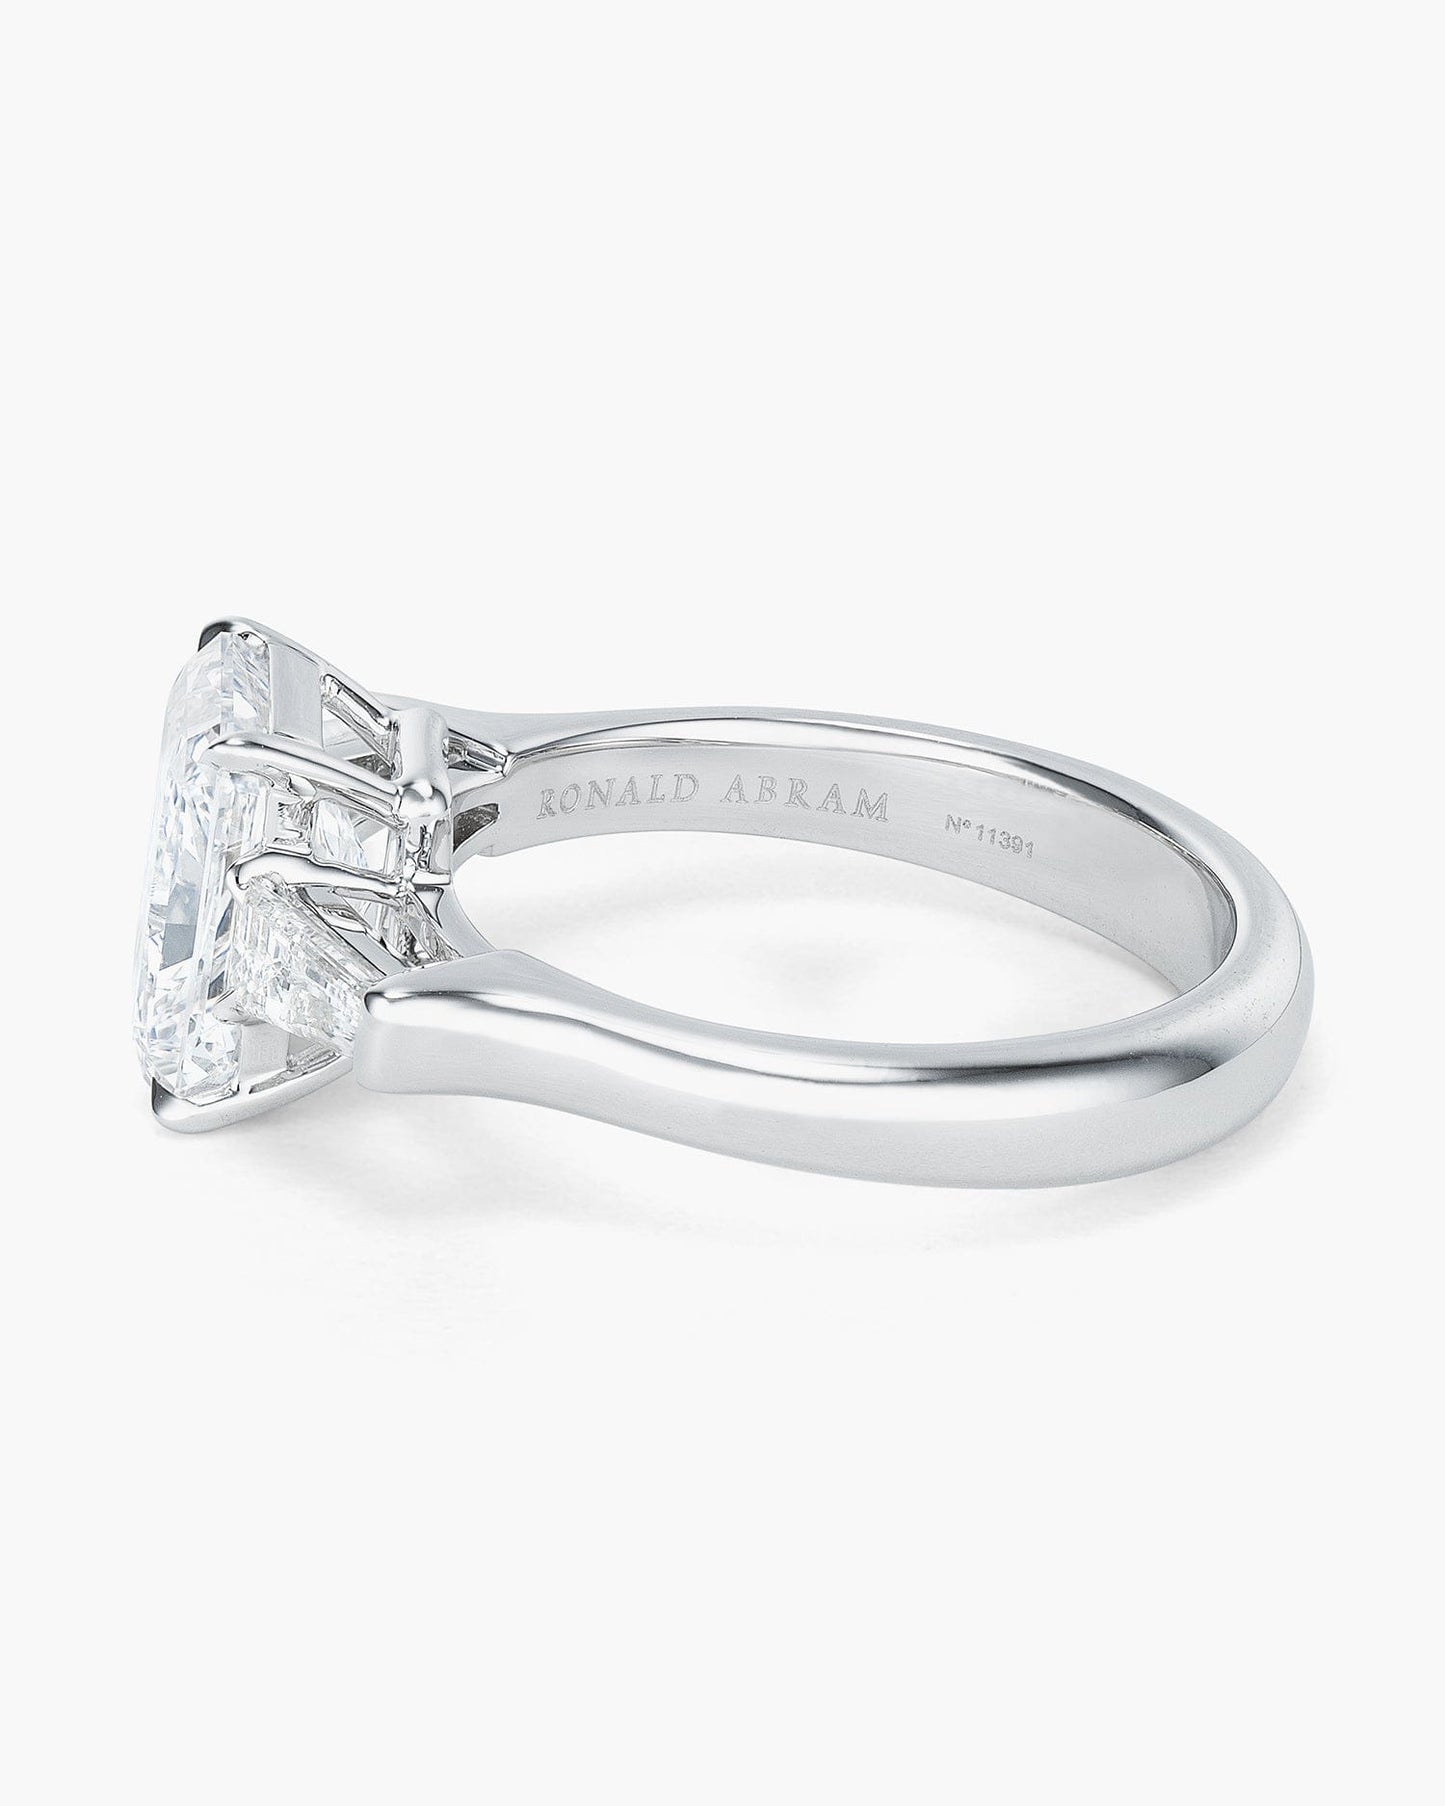 2.54 carat Radiant Cut Diamond Ring